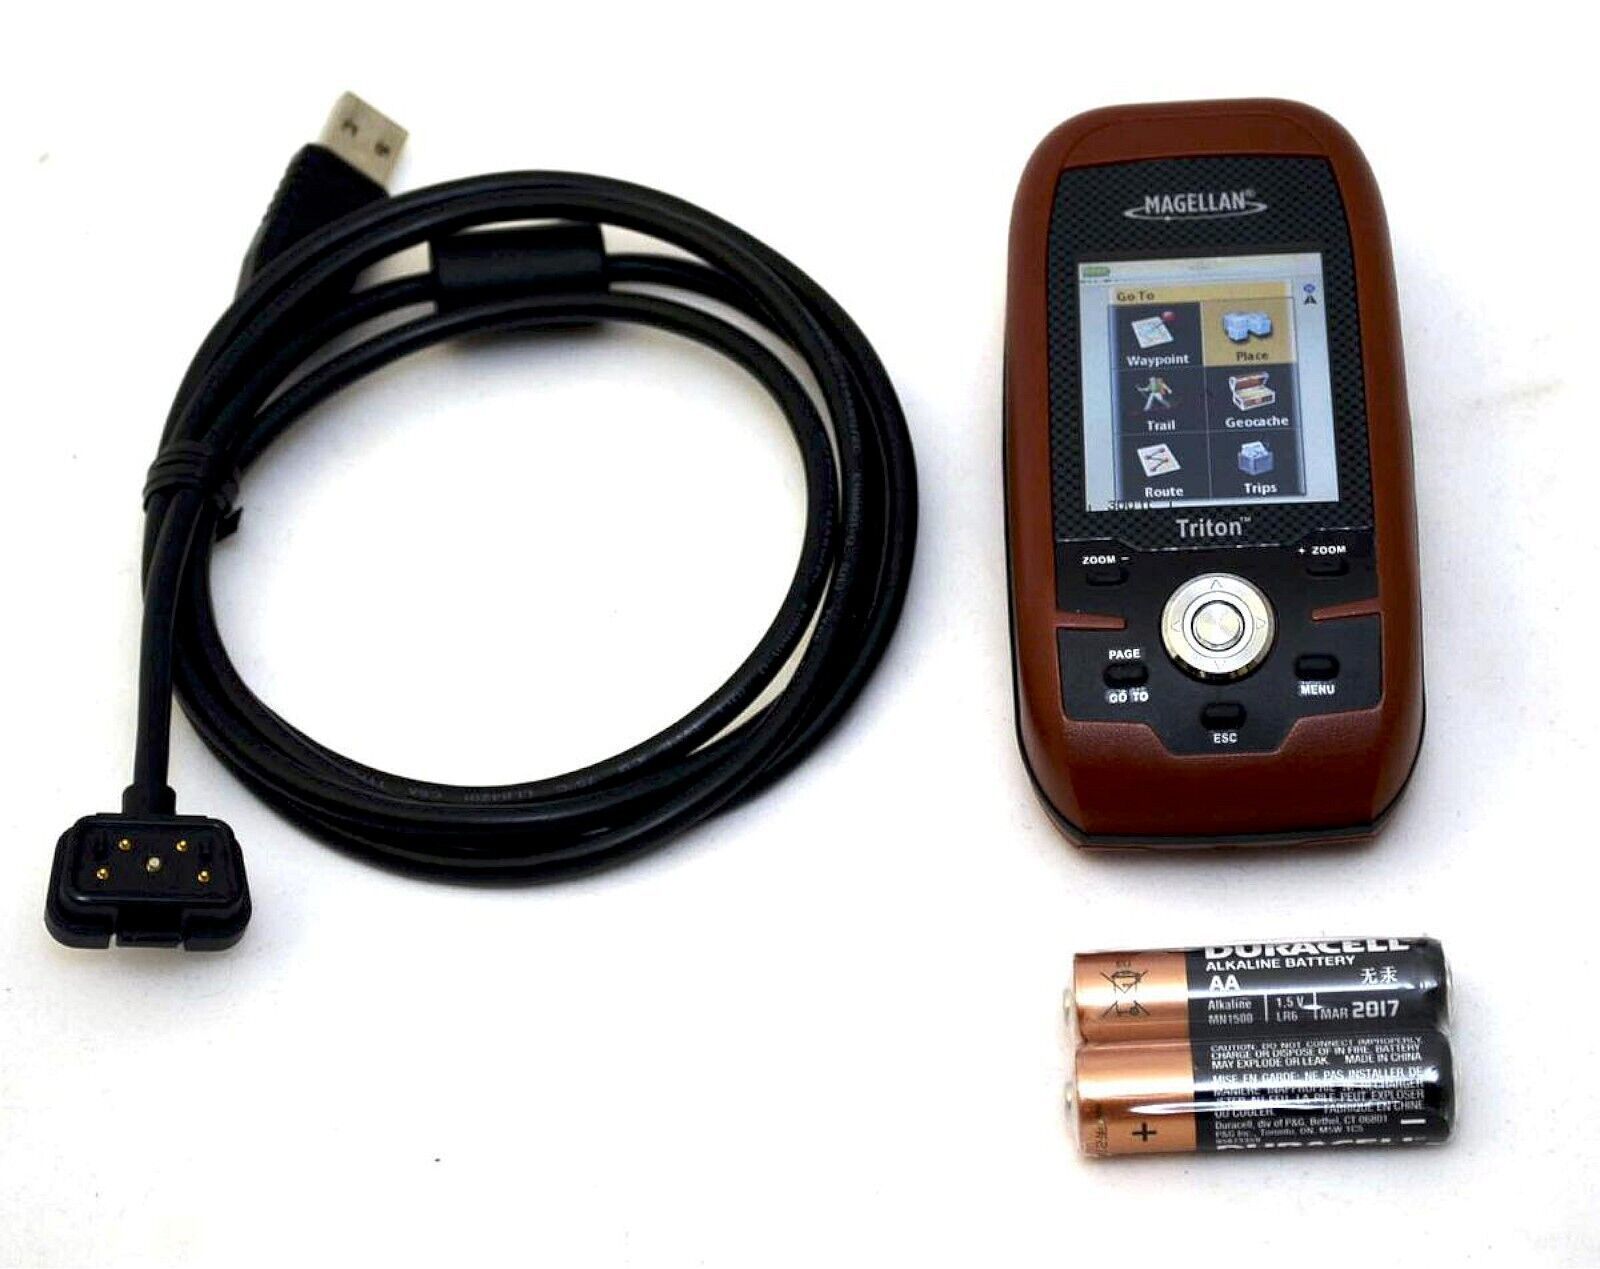 Magellan Triton 300 Handheld GPS Navigator Unit portable waterproof hiking cave - $59.35